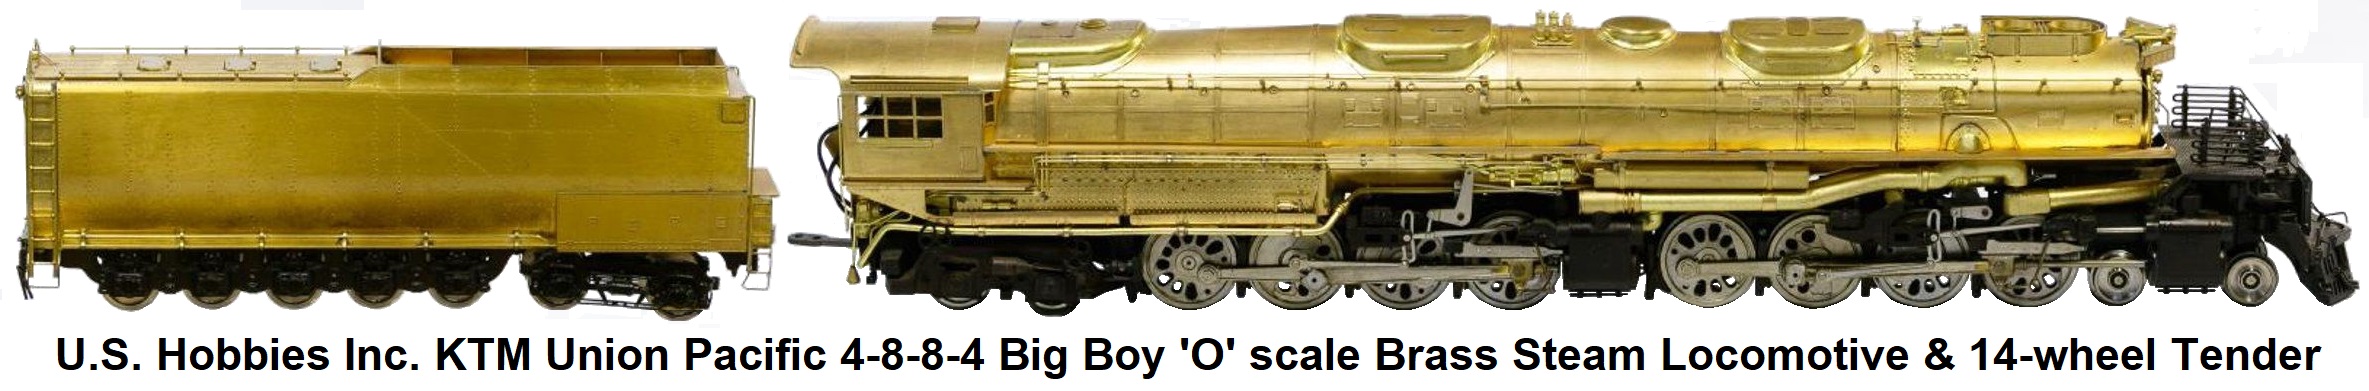 U.S. Hobbies Inc. 'O' scale Brass Import KTM Union Pacific 4-8-8-4 Big Boy Steam locomotive and 14-wheel tender